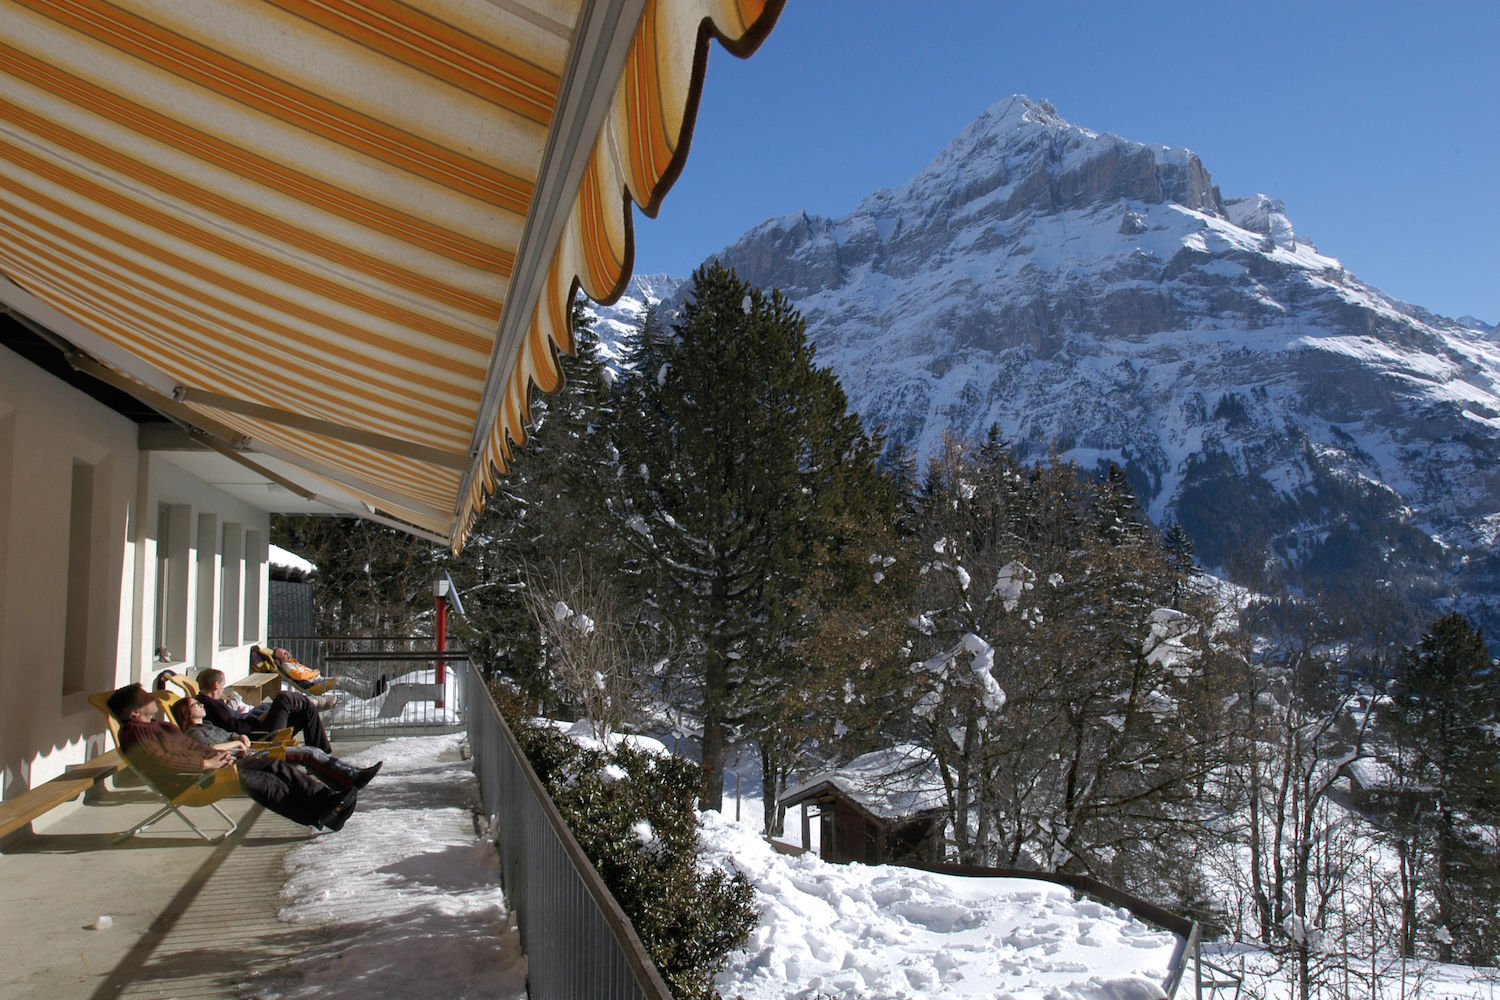 Youth Hostel Grindelwald - Grindelwald, Switzerland Reviews - Hostelz.com